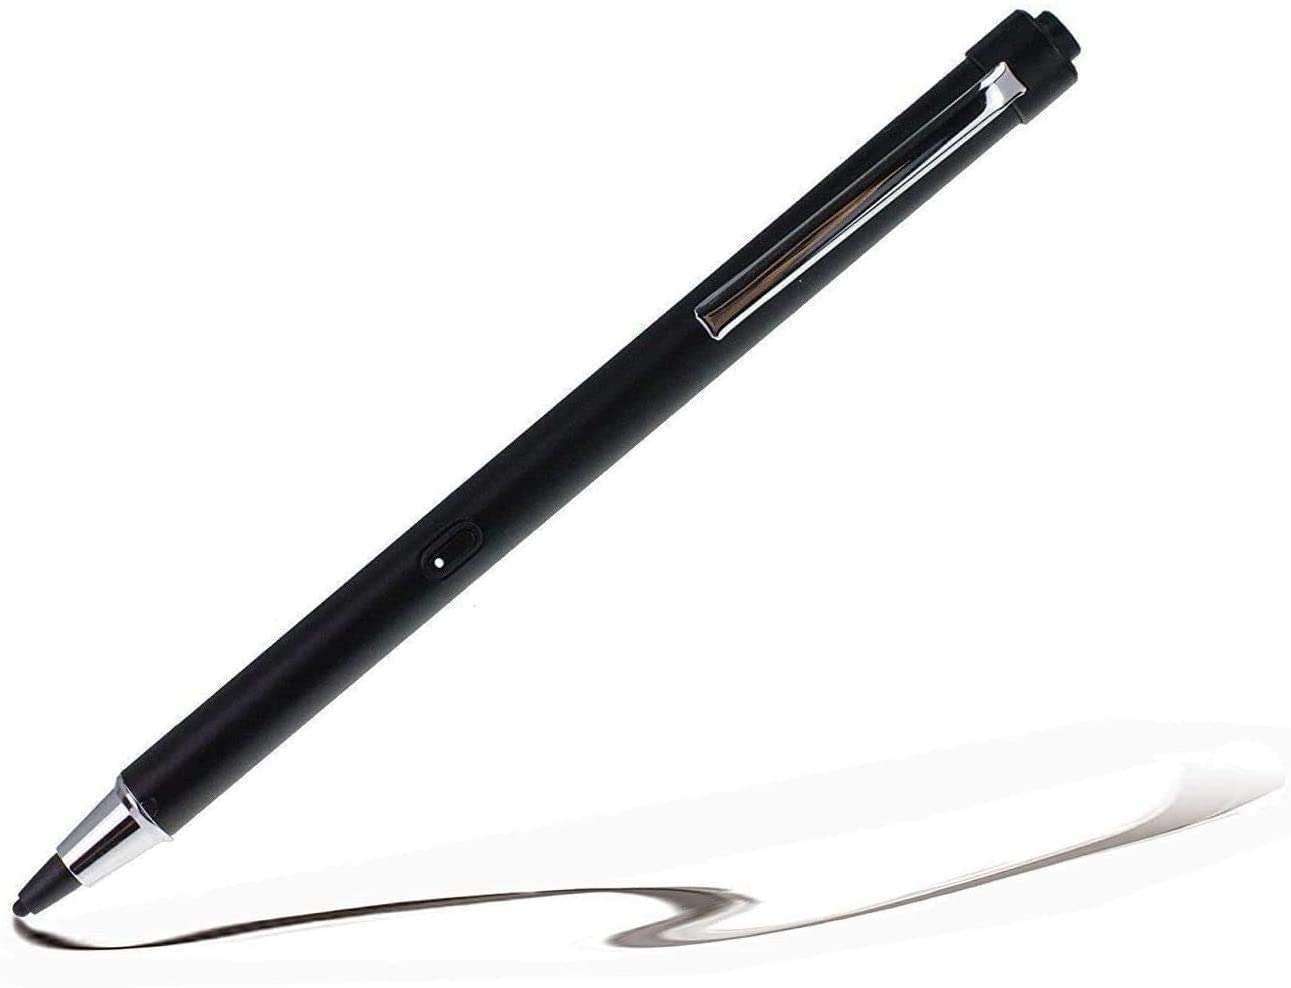 Broonel Black Mini stylus for the Samsung XE500C13K03US 3 11.6